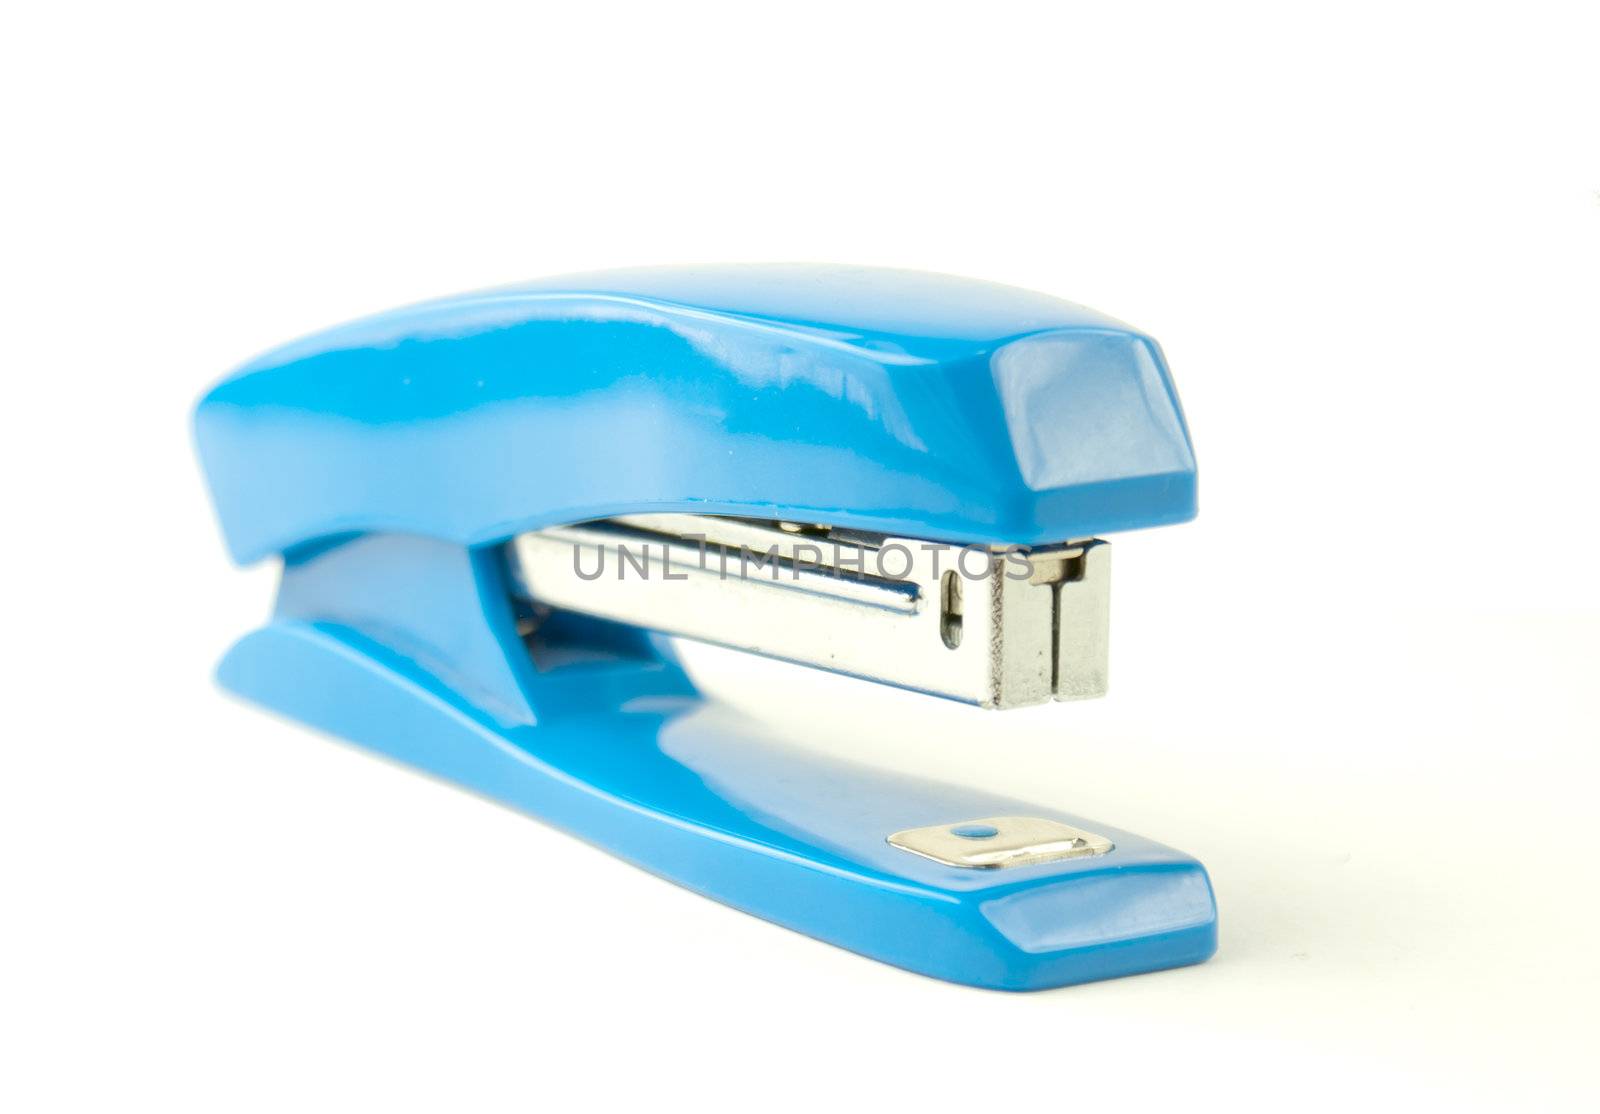 Blue stapler isolated on the white background